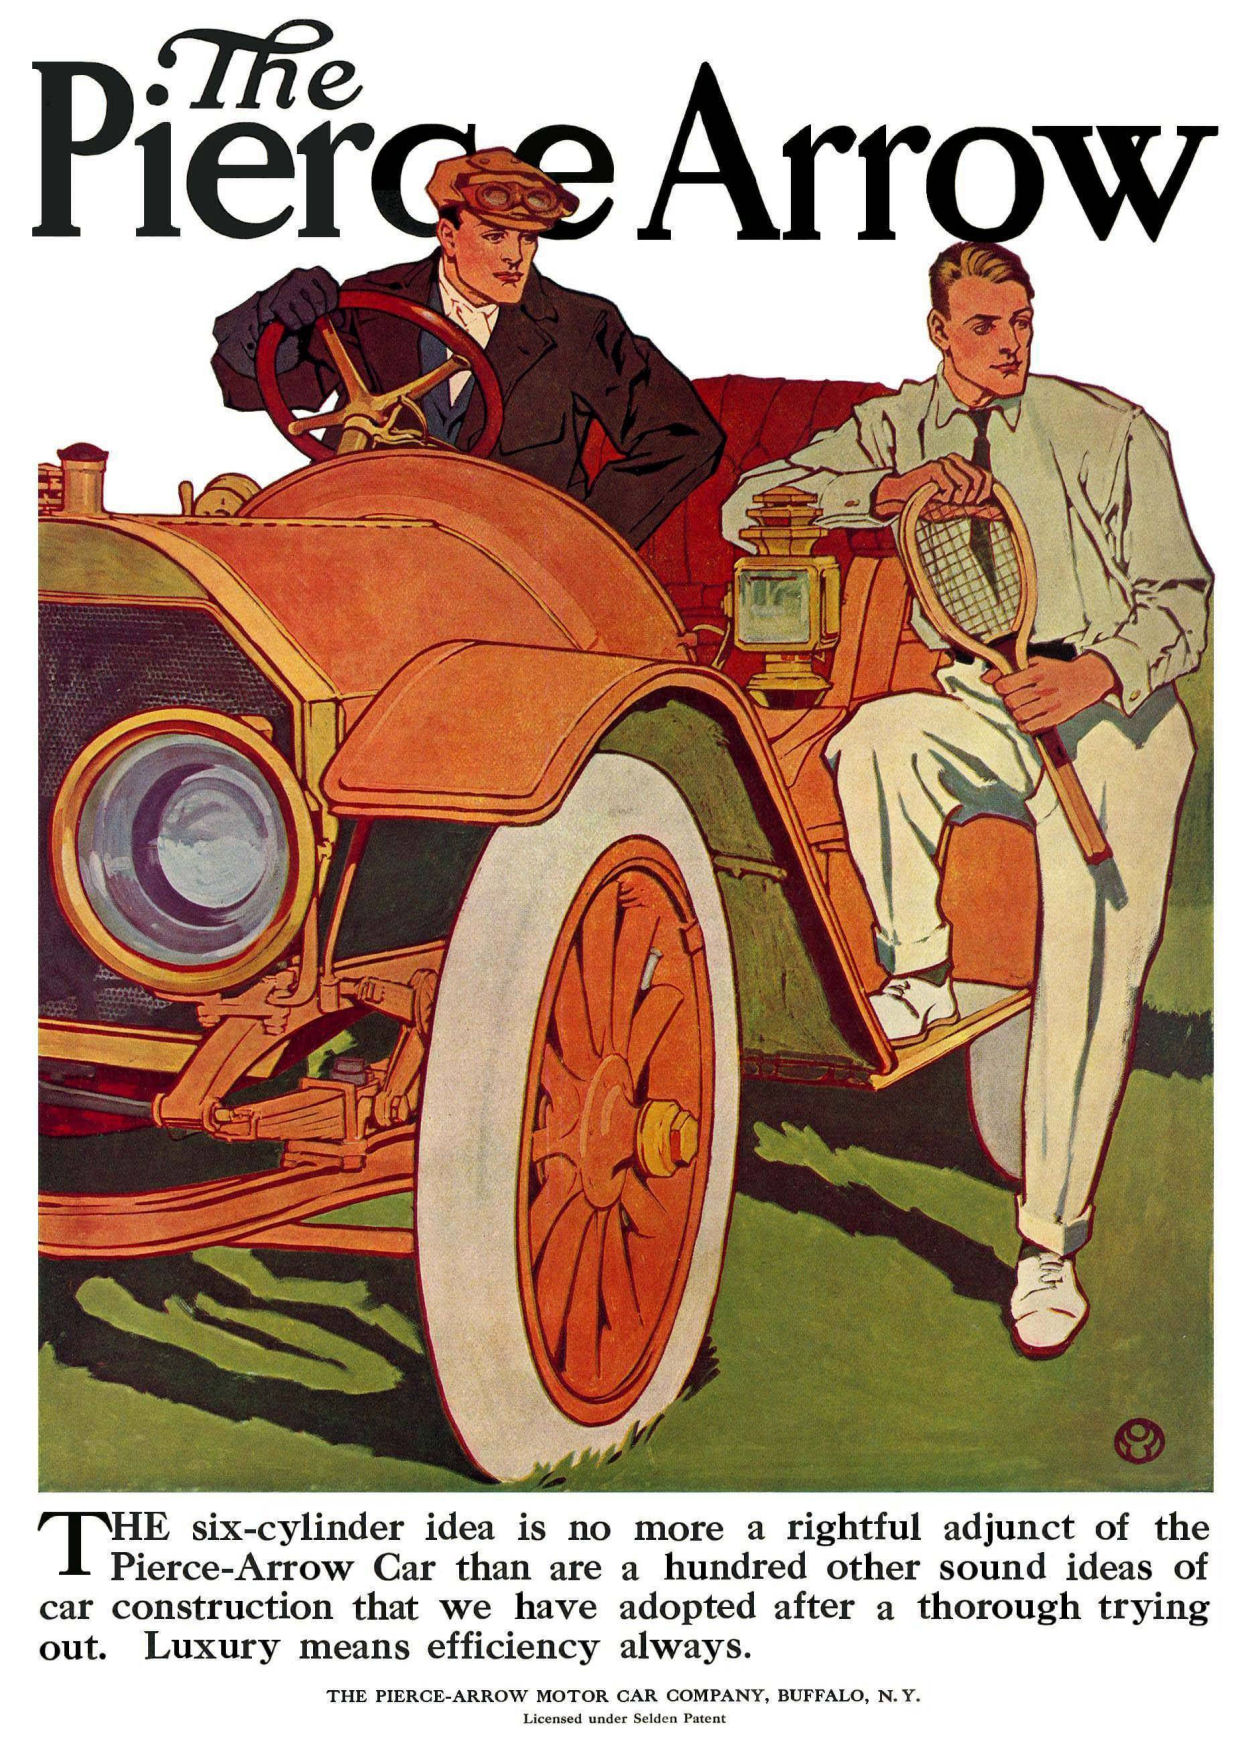 1910 Pierce-Arrow Auto Advertising